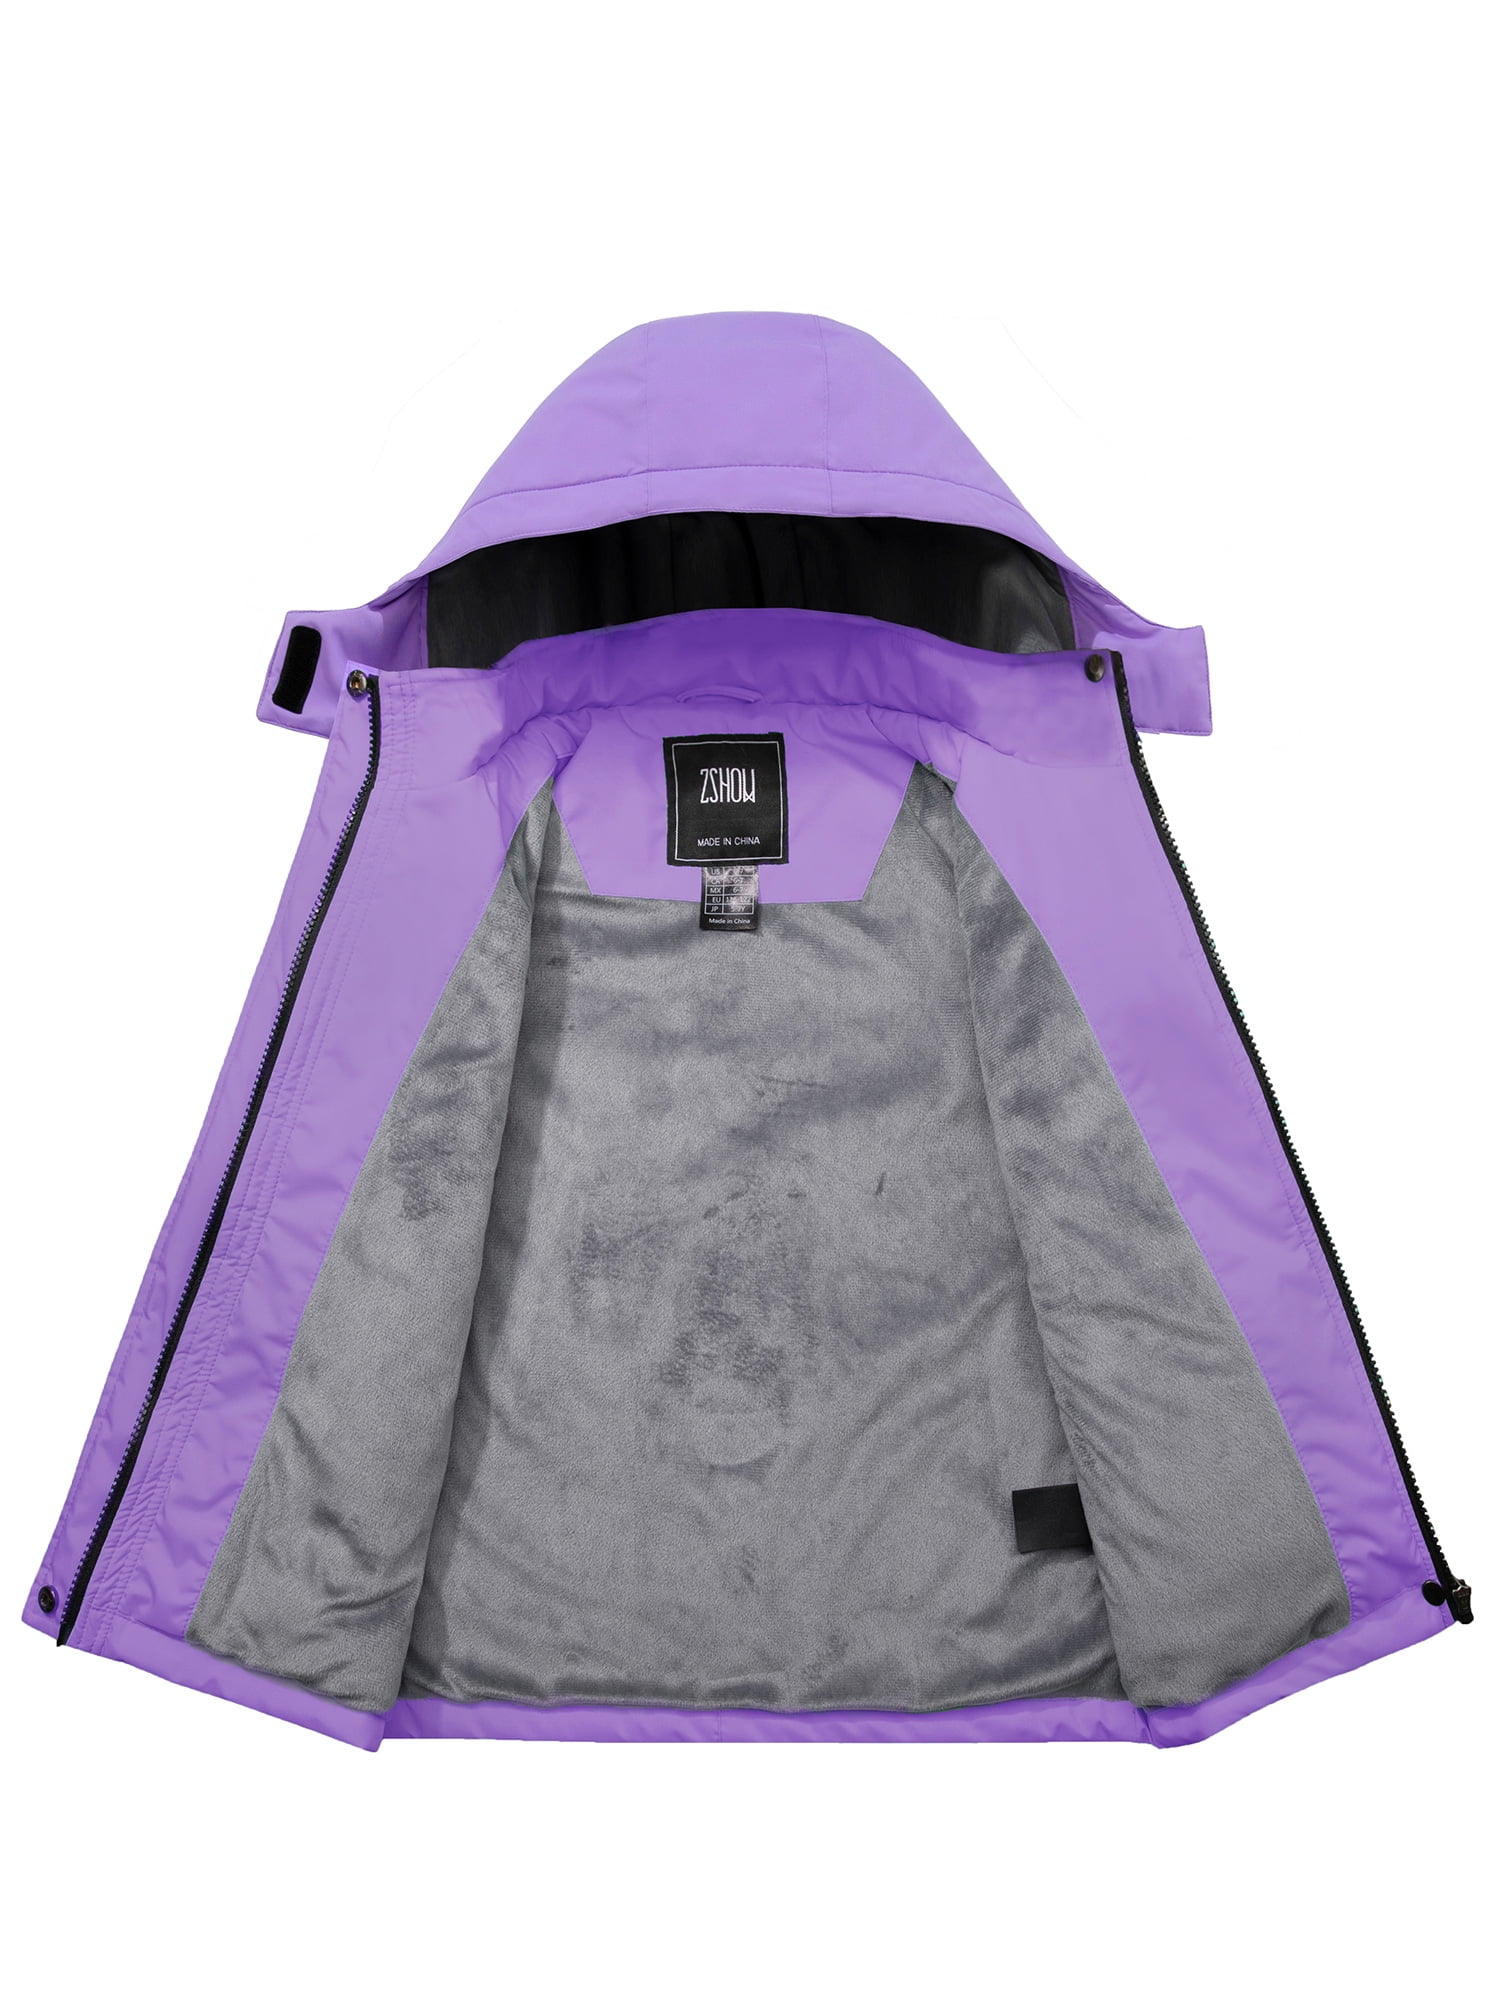 ZSHOW Girl\'s Snow Coat Waterproof Mountain Ski Jacket Hooded Rain Coat  Purple 14/16